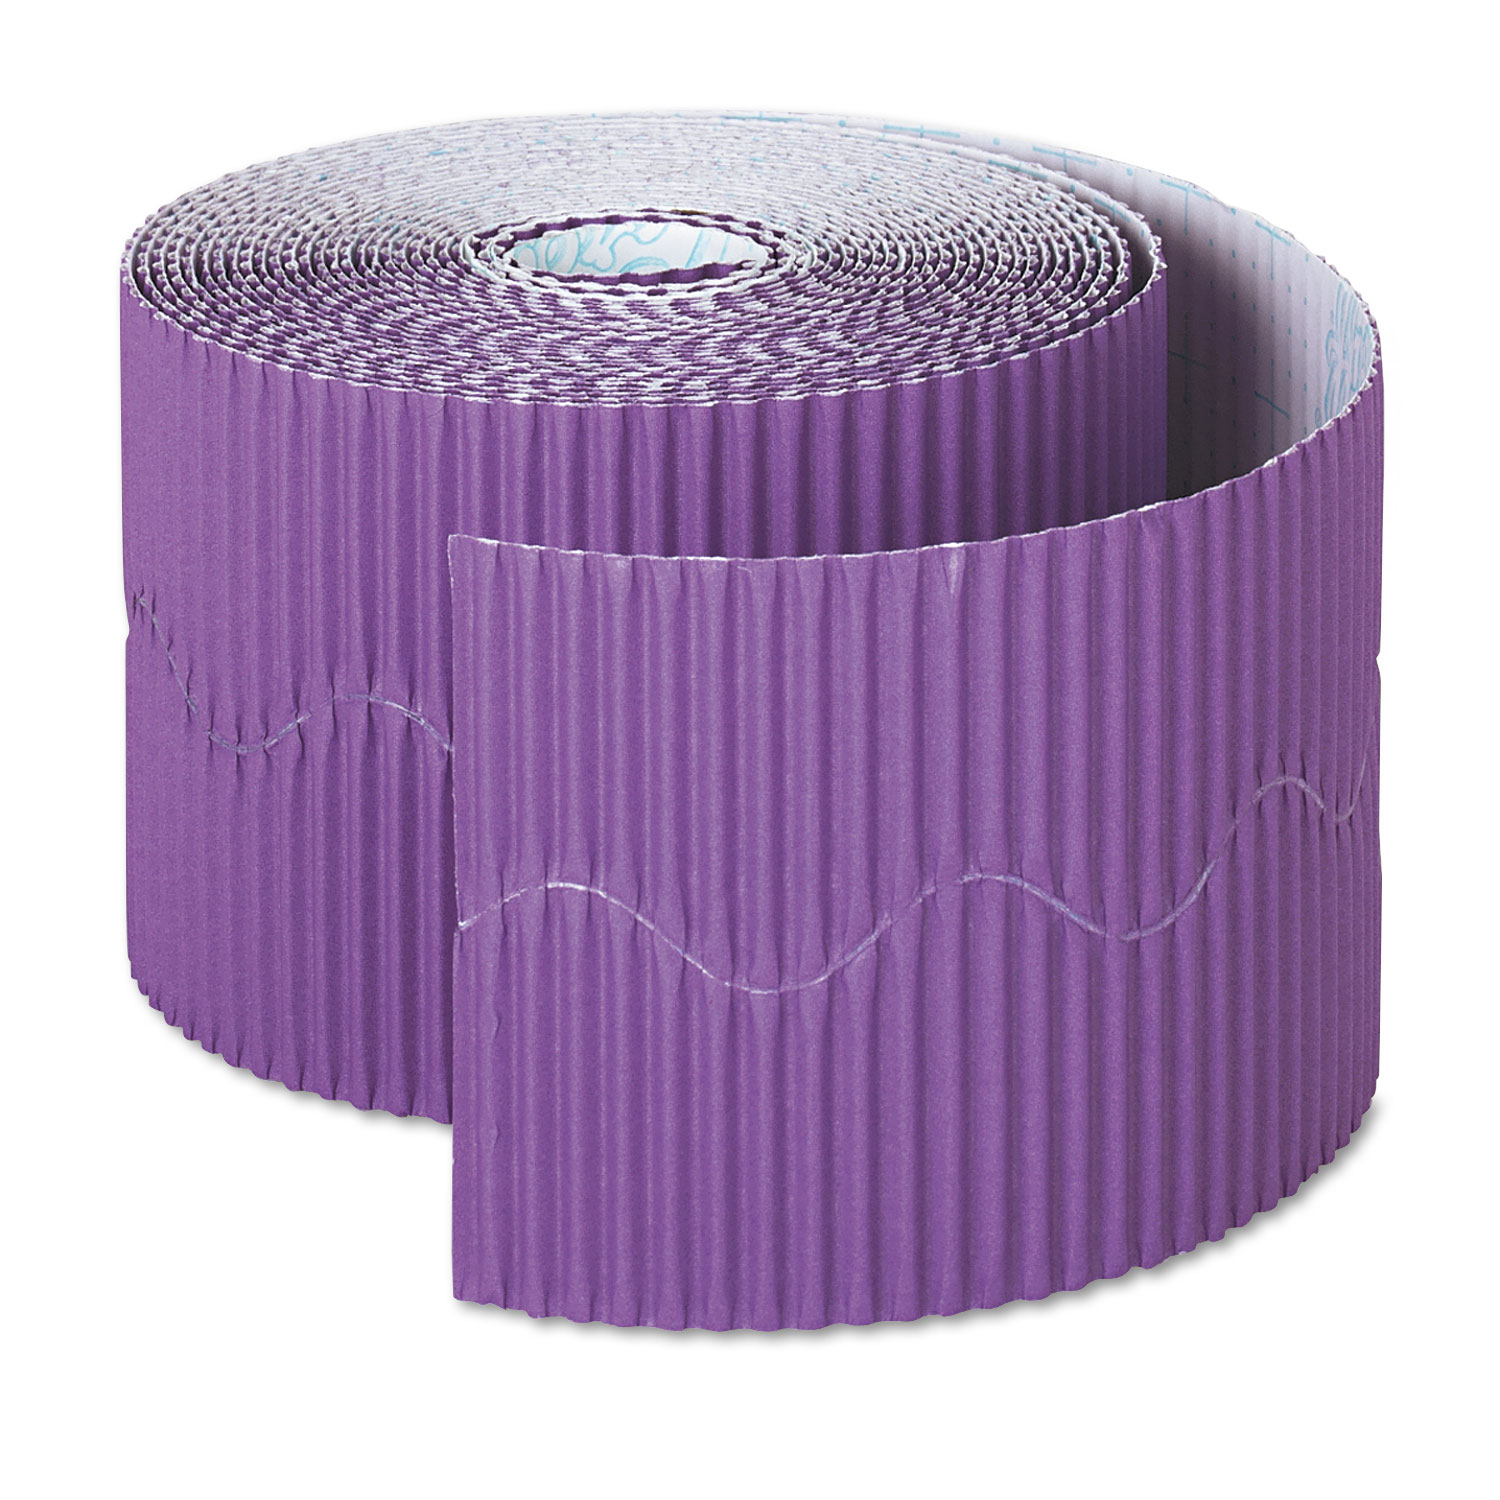 Bordette Decorative Border, 2 1/4 x 50 Roll, Violet